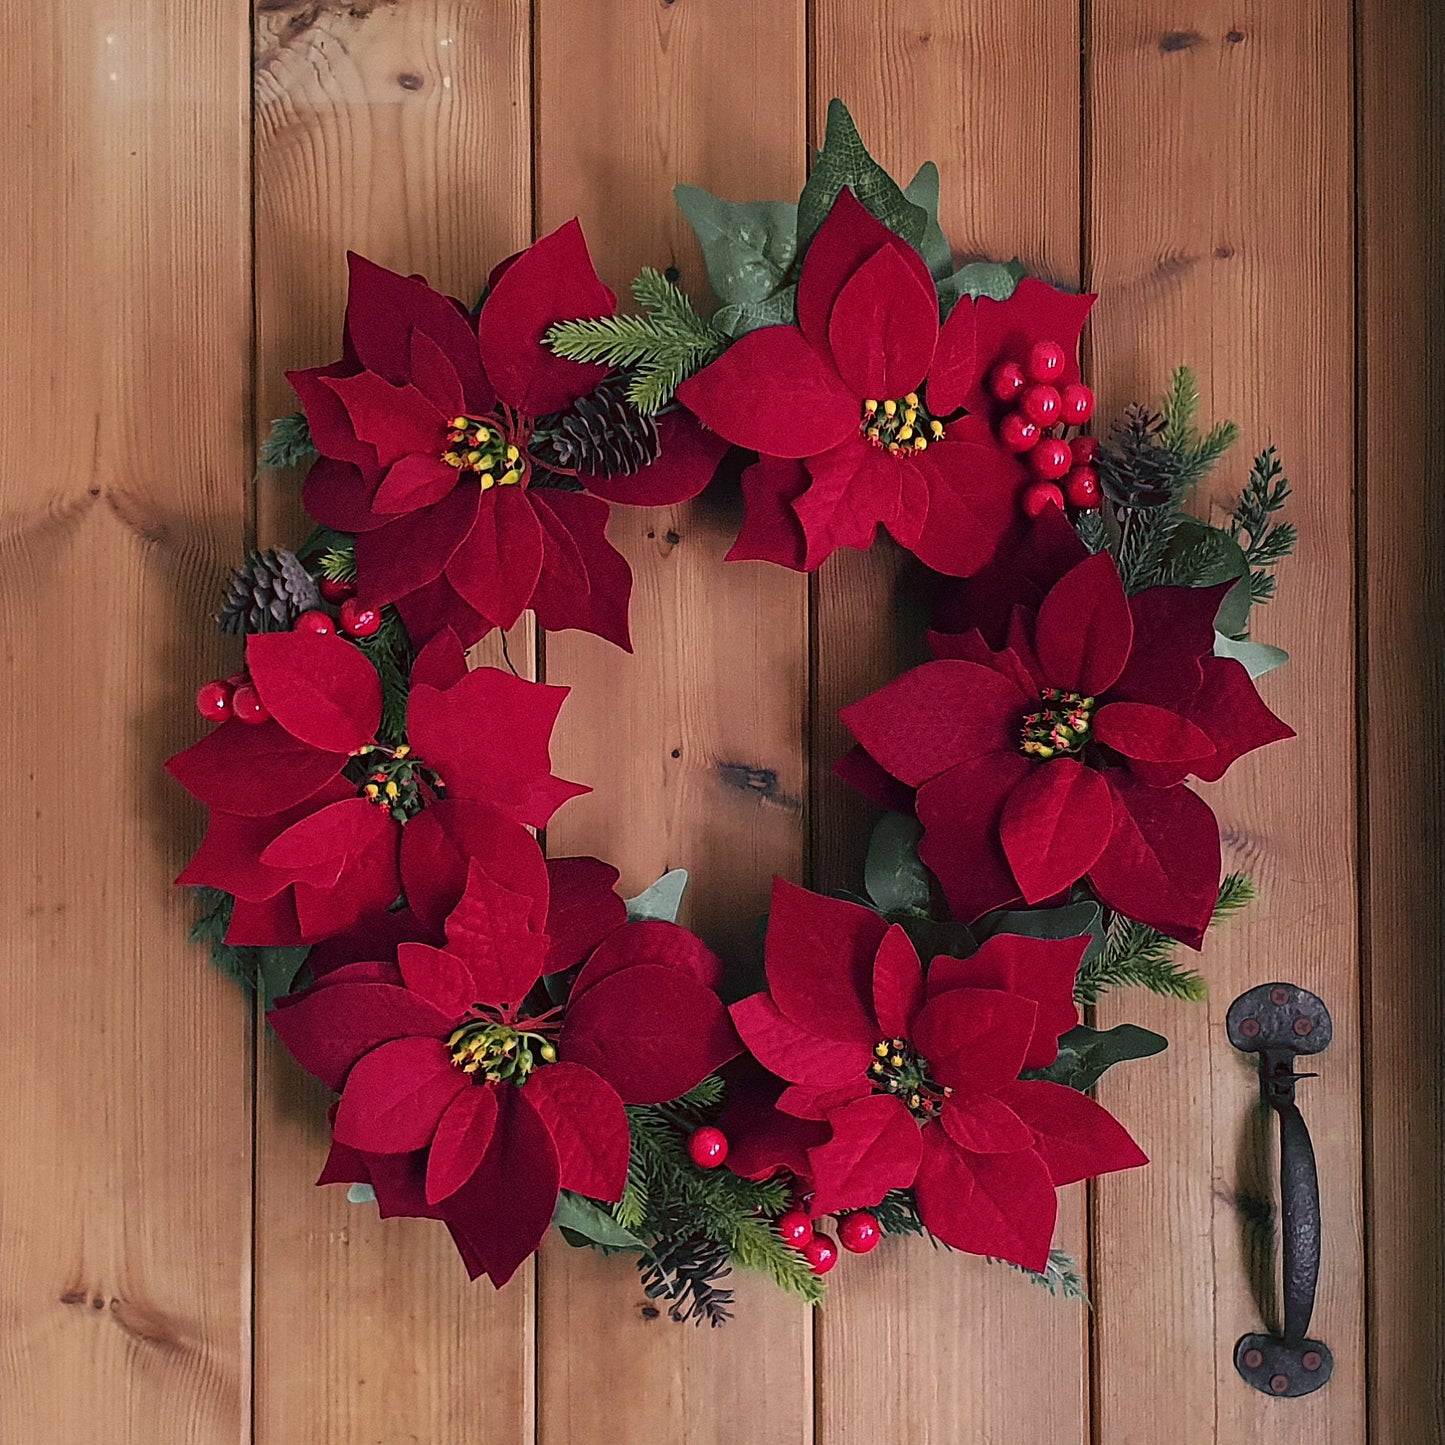 Large Poinsettia Christmas Wreath on Cottage Door